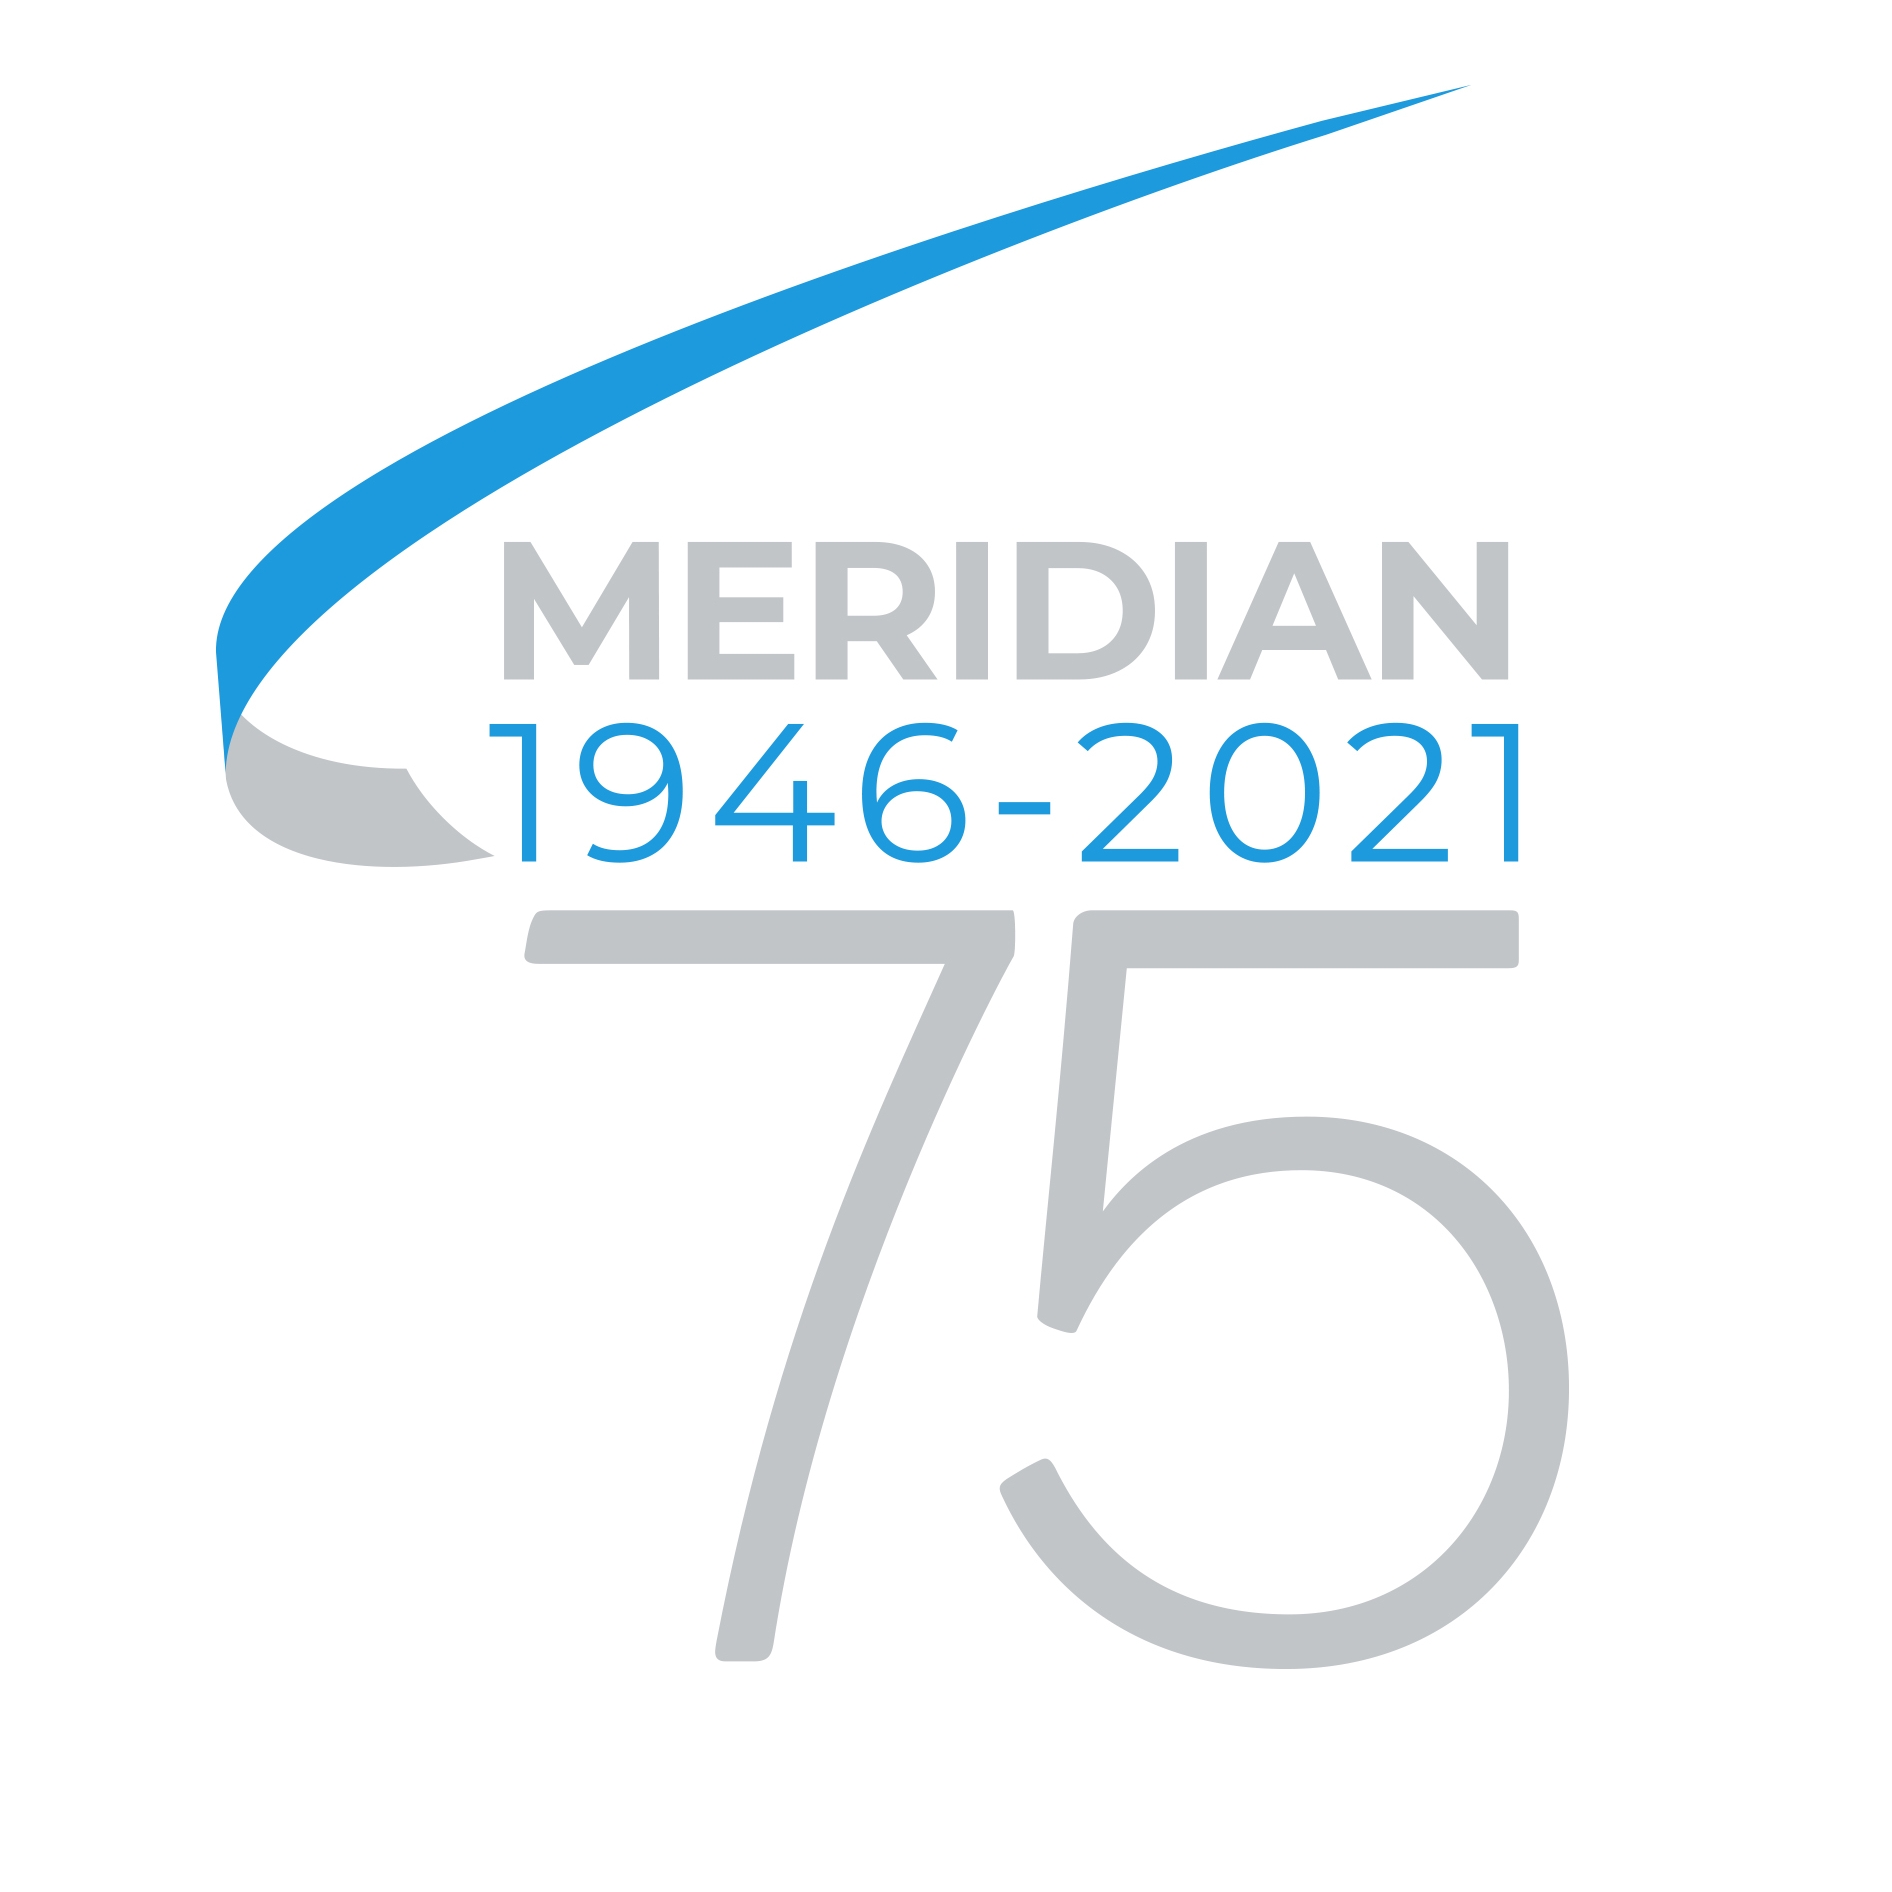 Meridian Companies